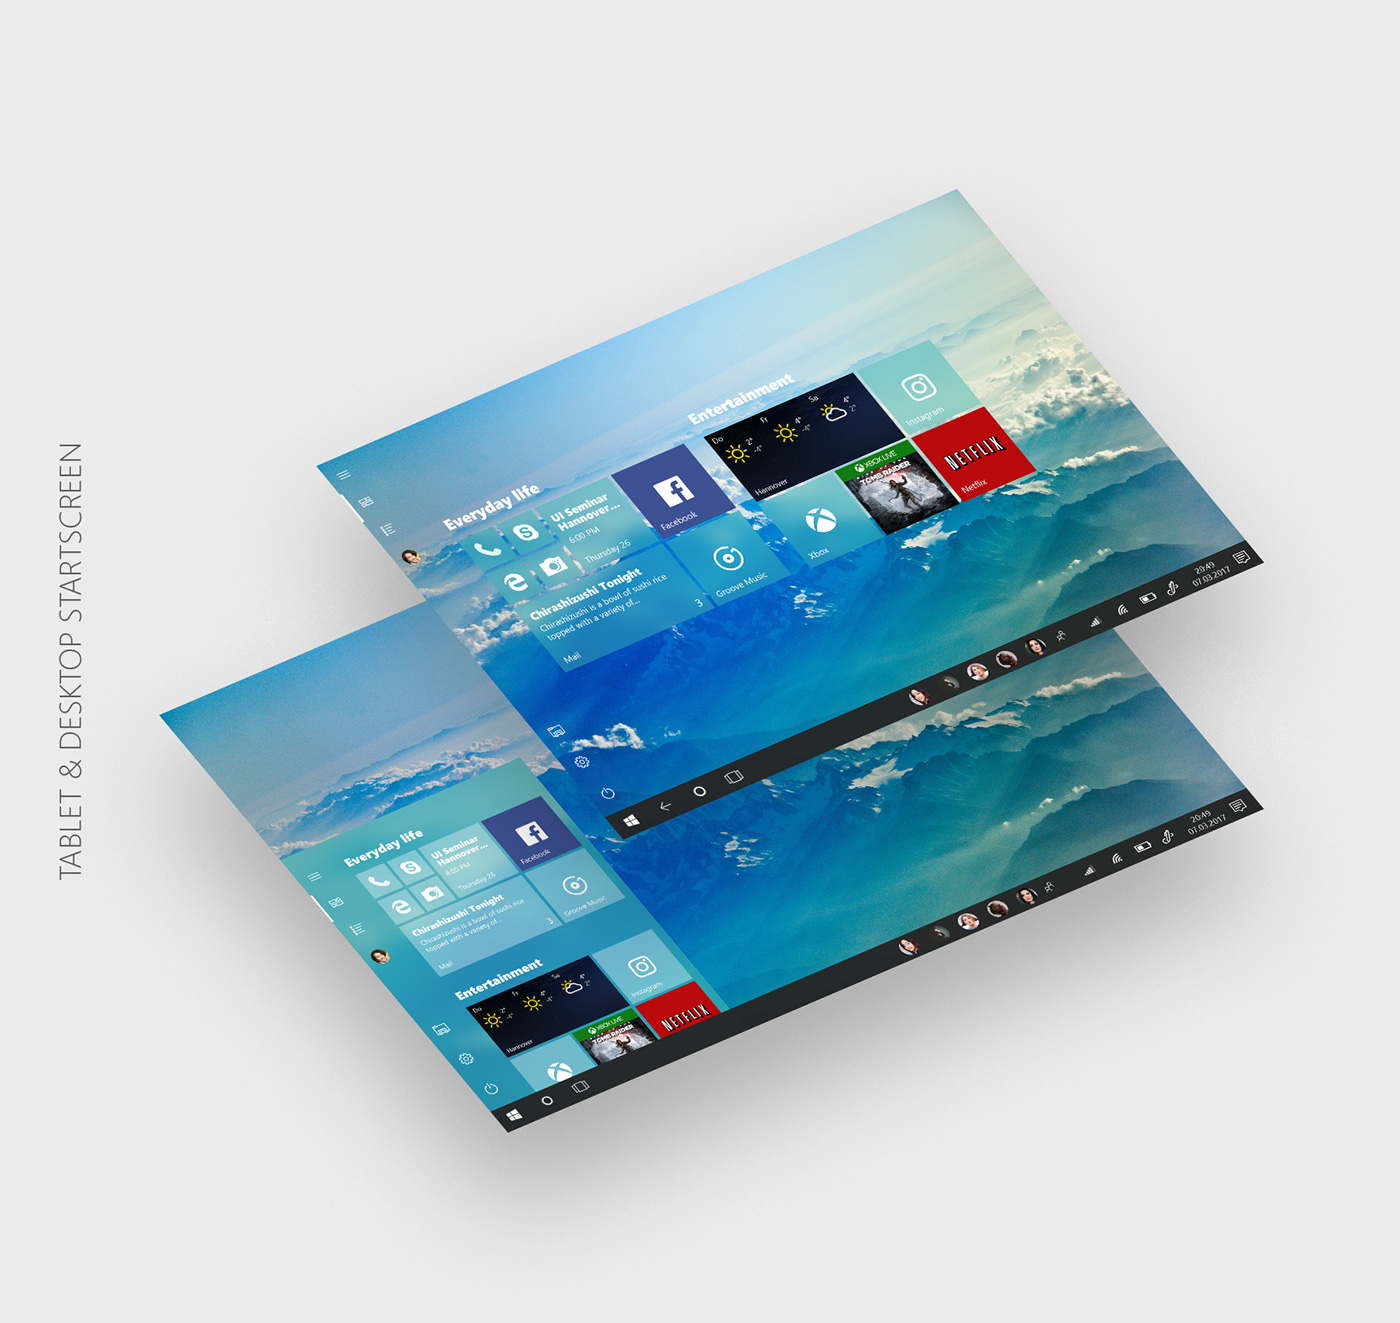 windows 10 windows 10 mobile Project Neon Cshell Microsoft continuum surface phone foldable screen